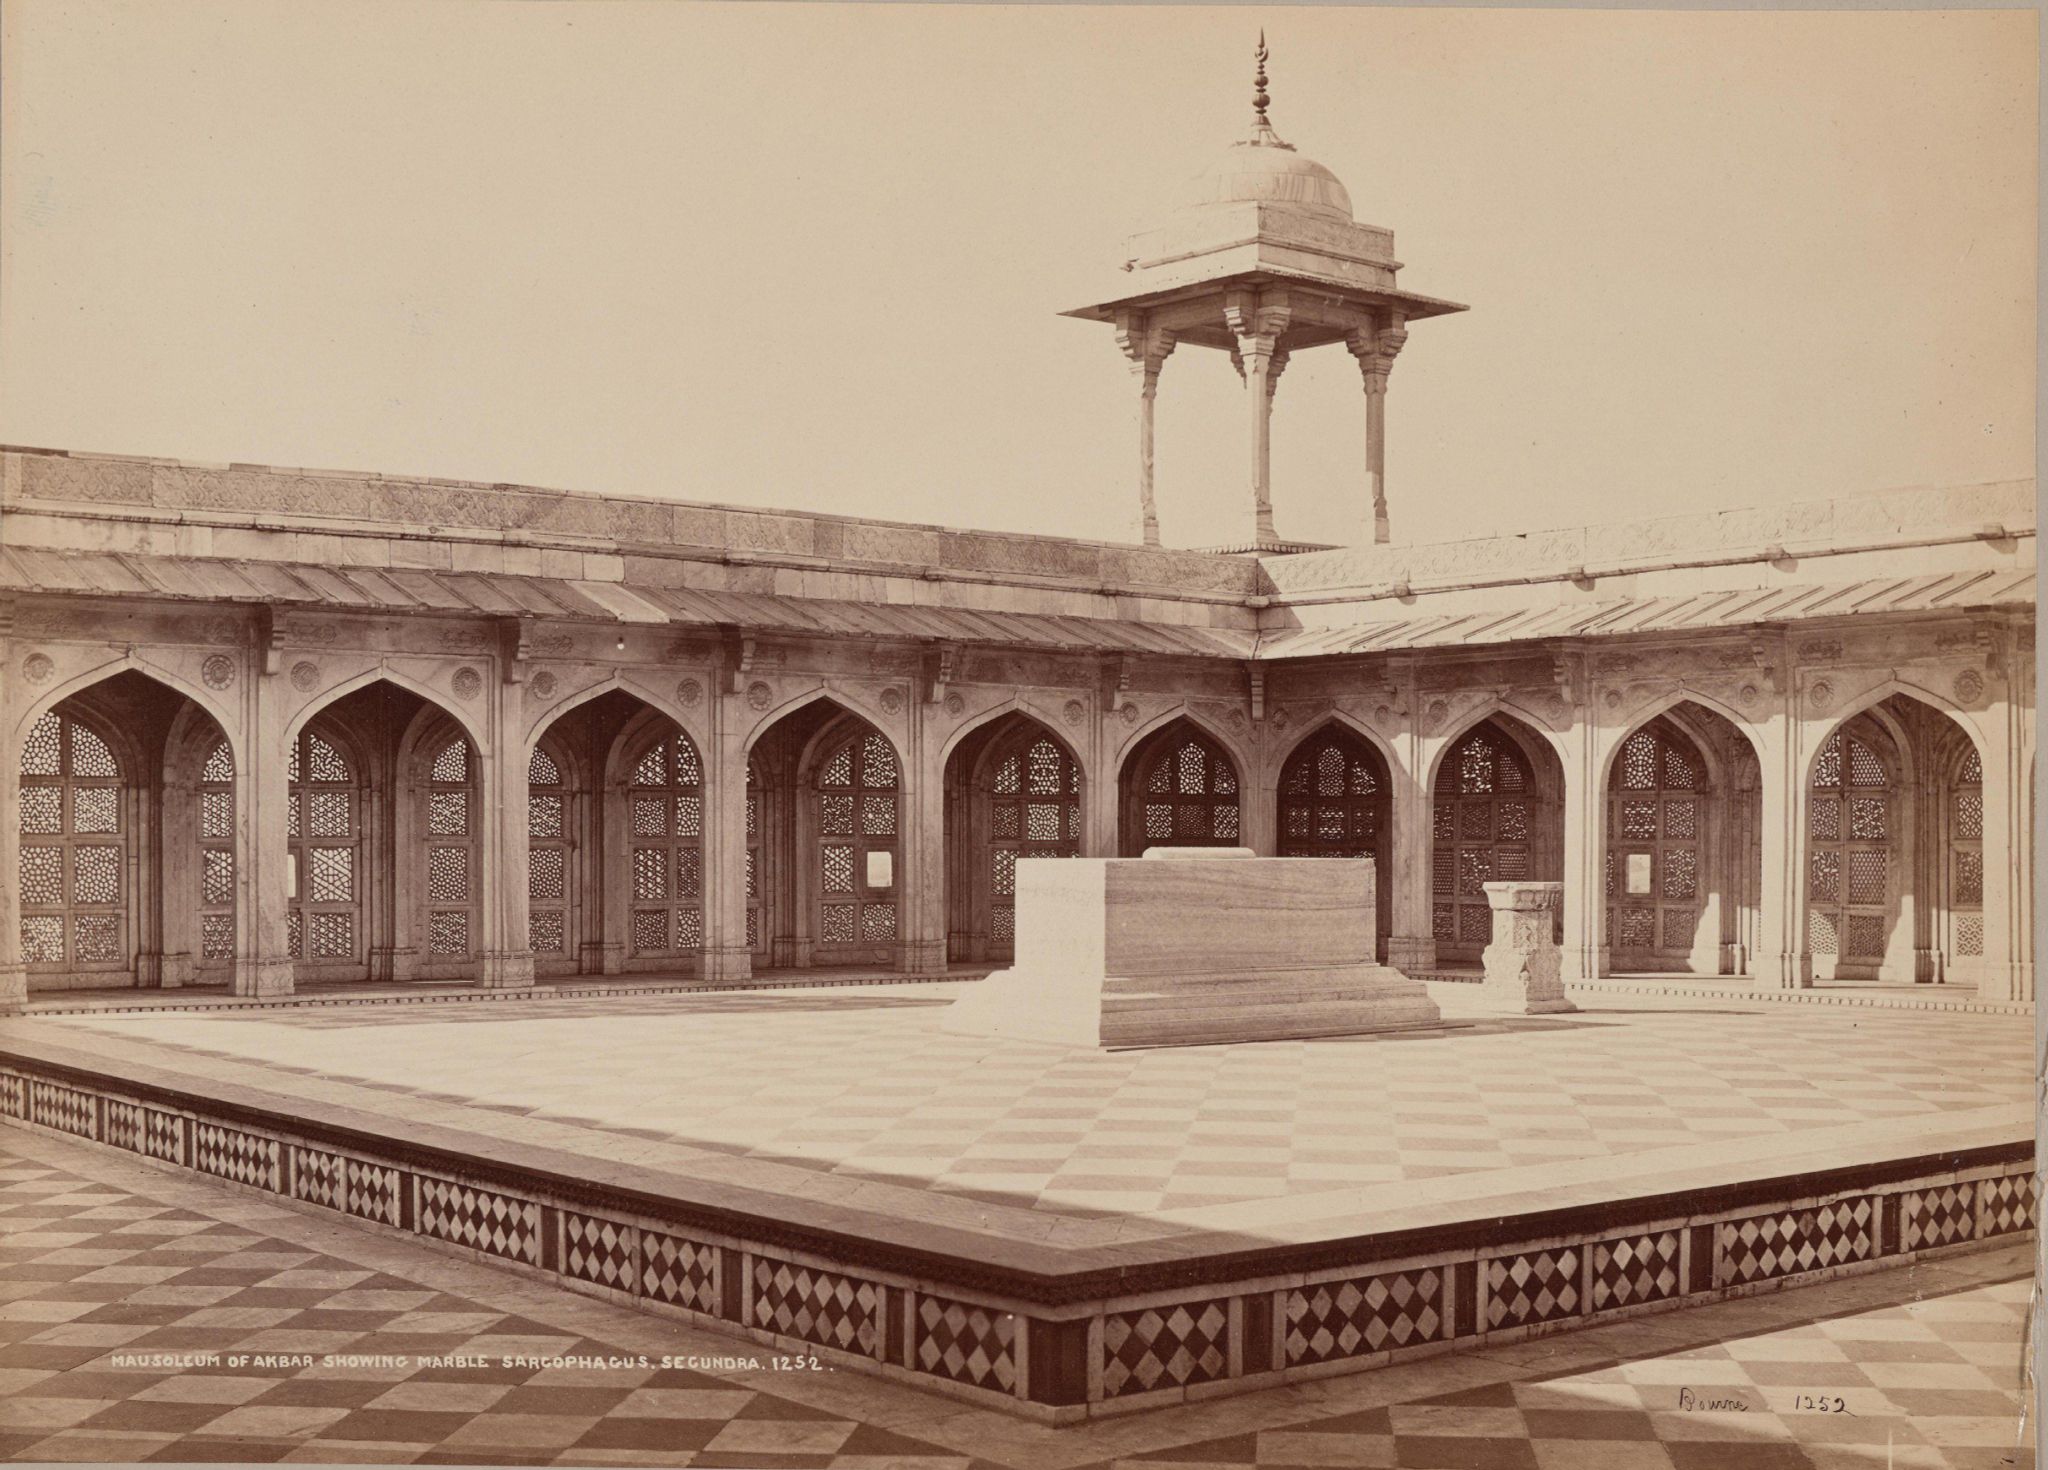 Mausoleum of Akbar Showing Marble Sarcophagus, Secundra